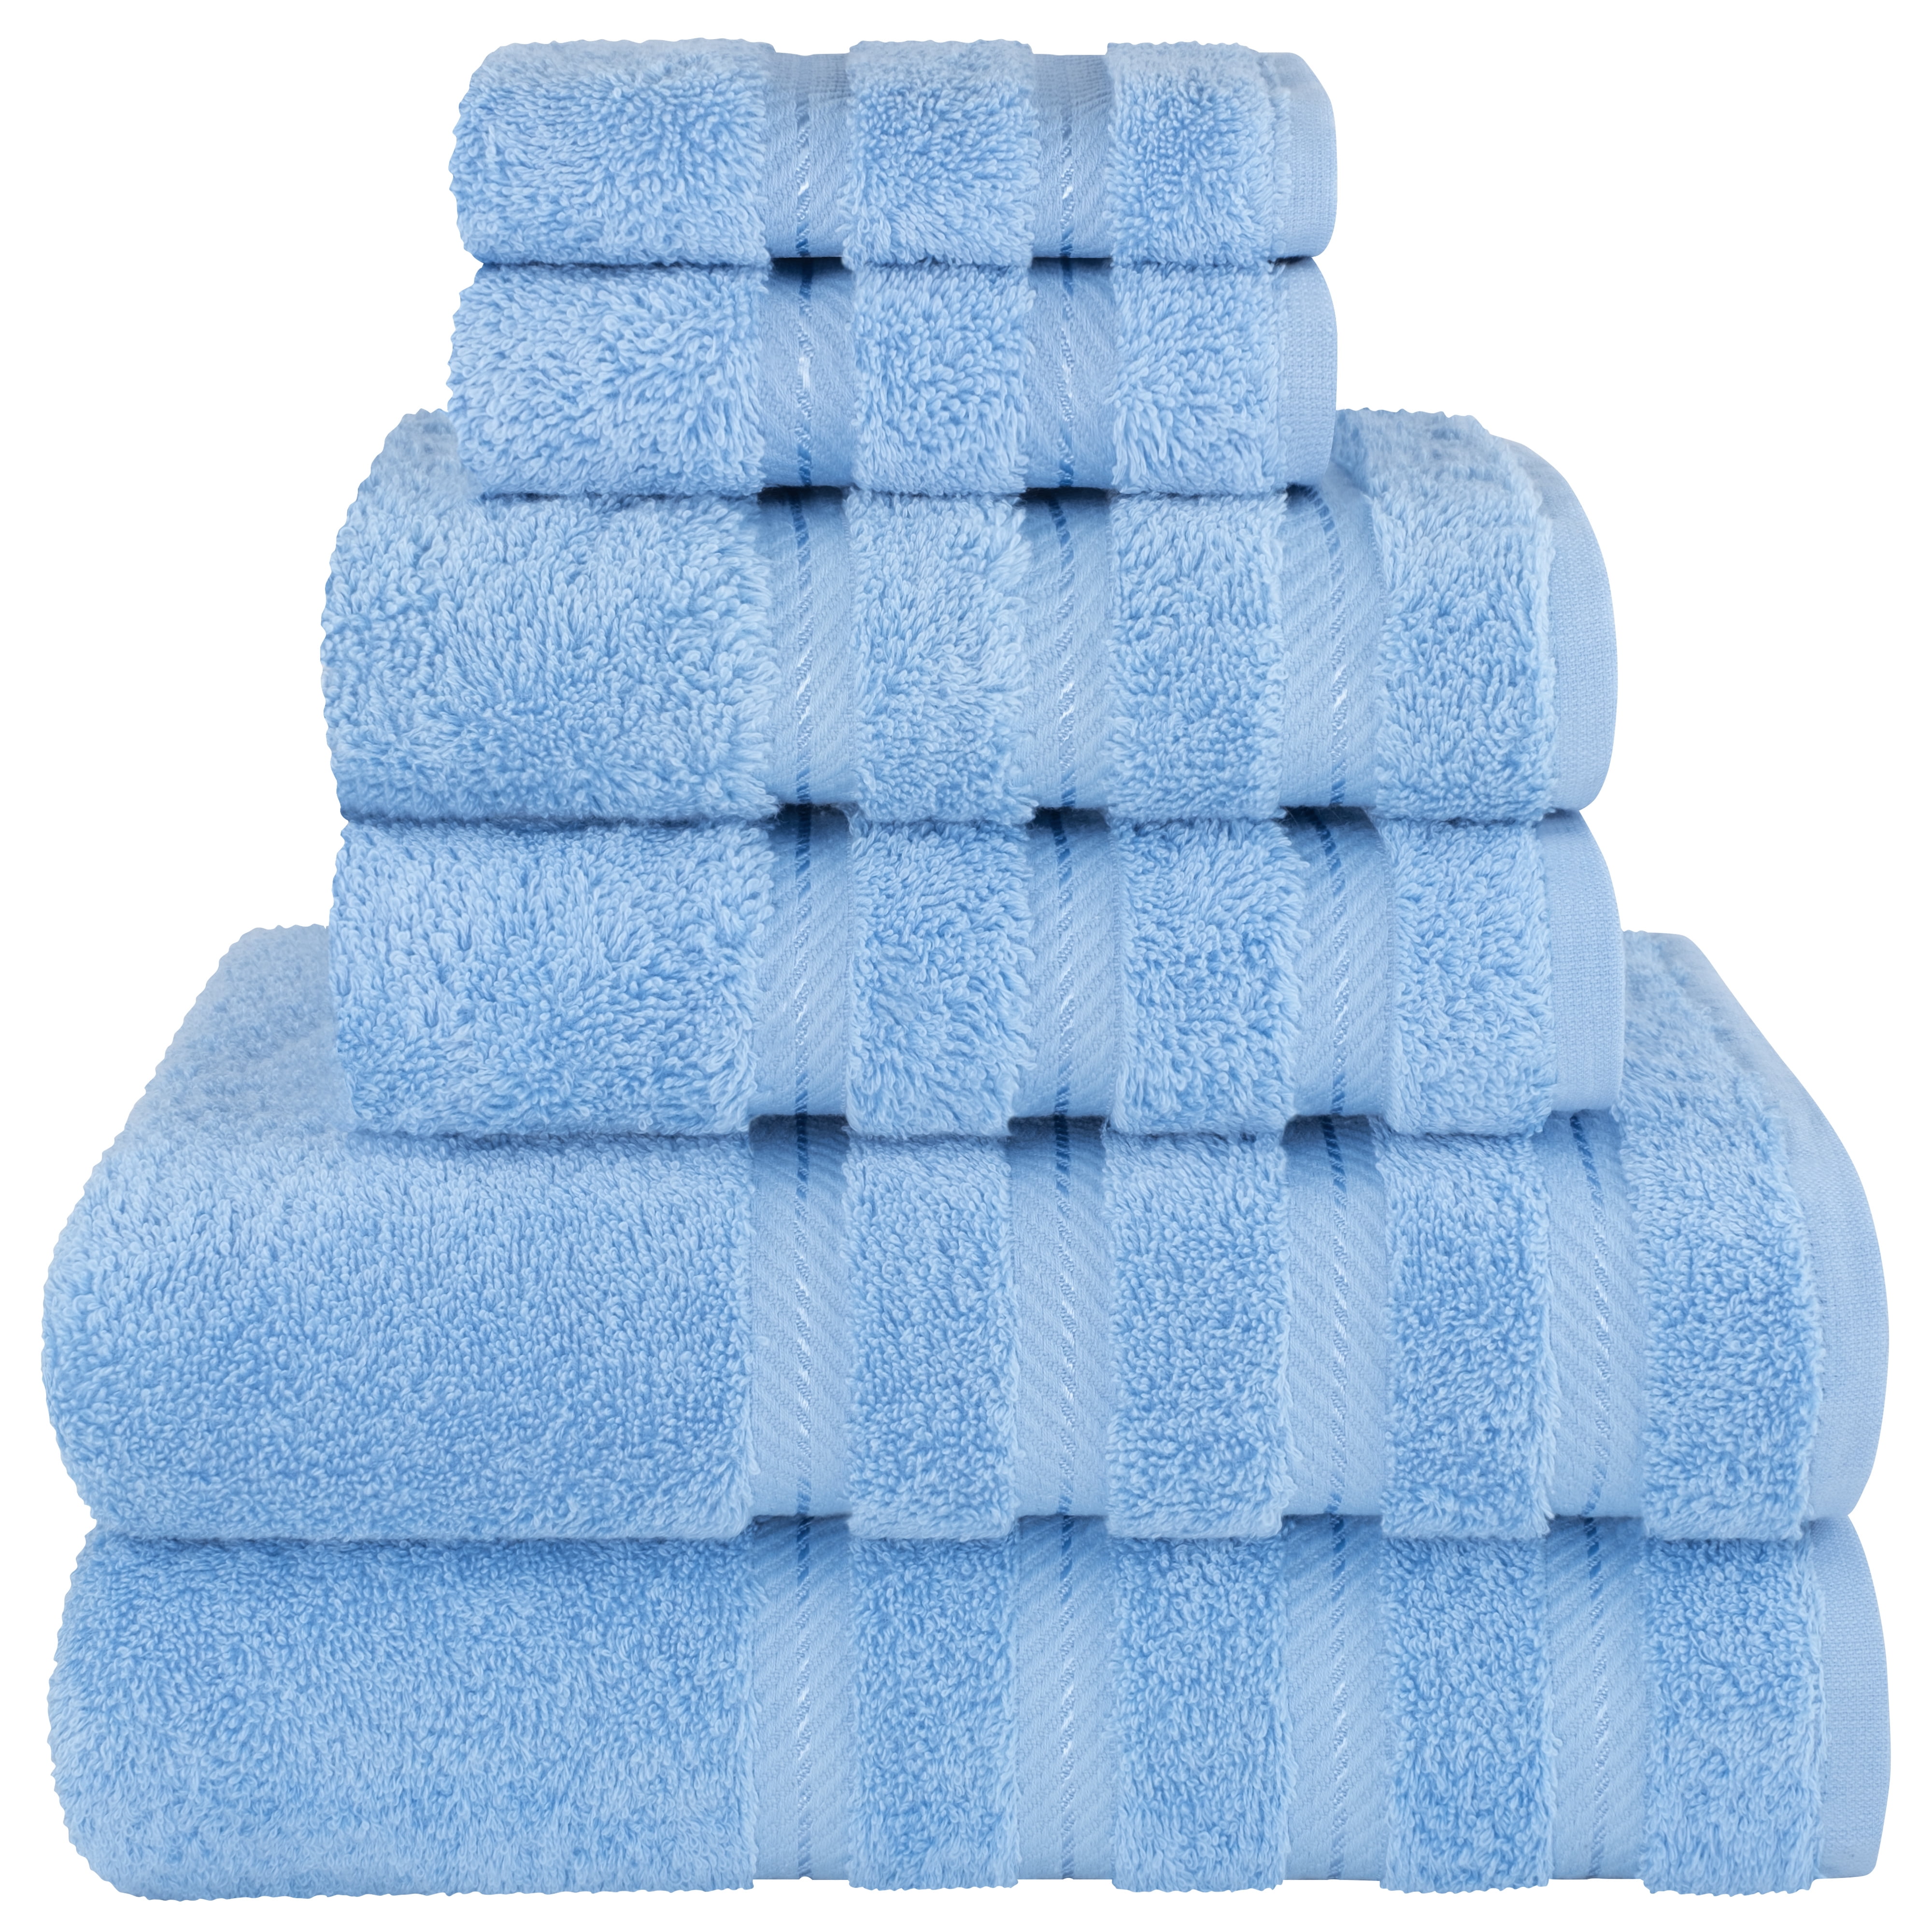 Blue Choose Color Member Mark Premium Microfiber Cleaning Towels 36 Count 